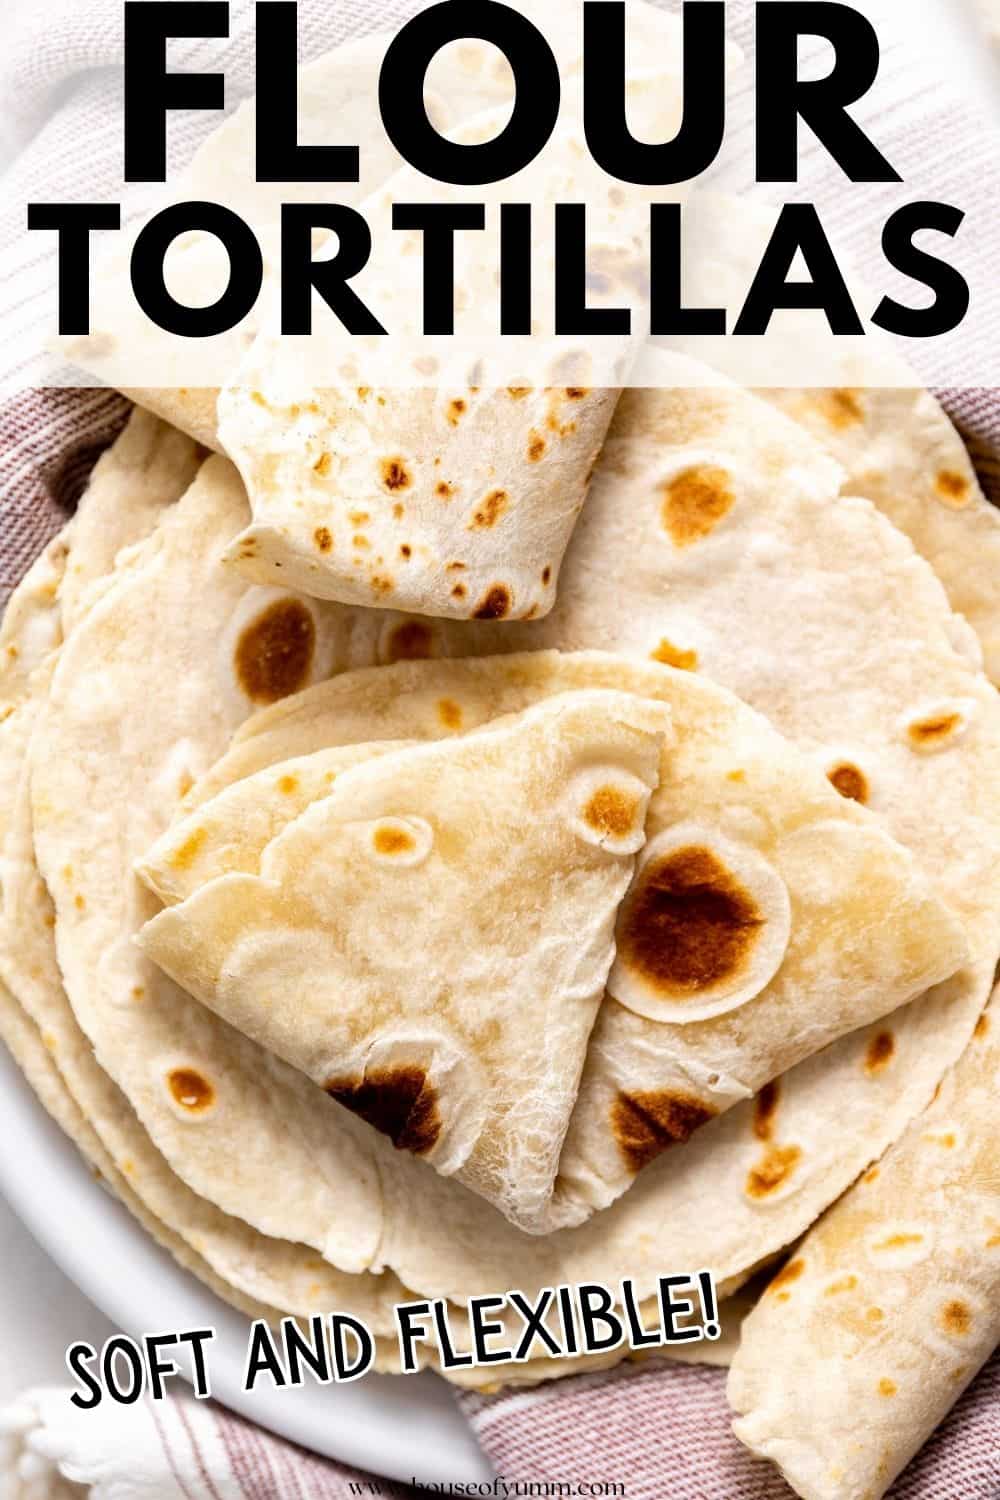 Flour tortillas with text.